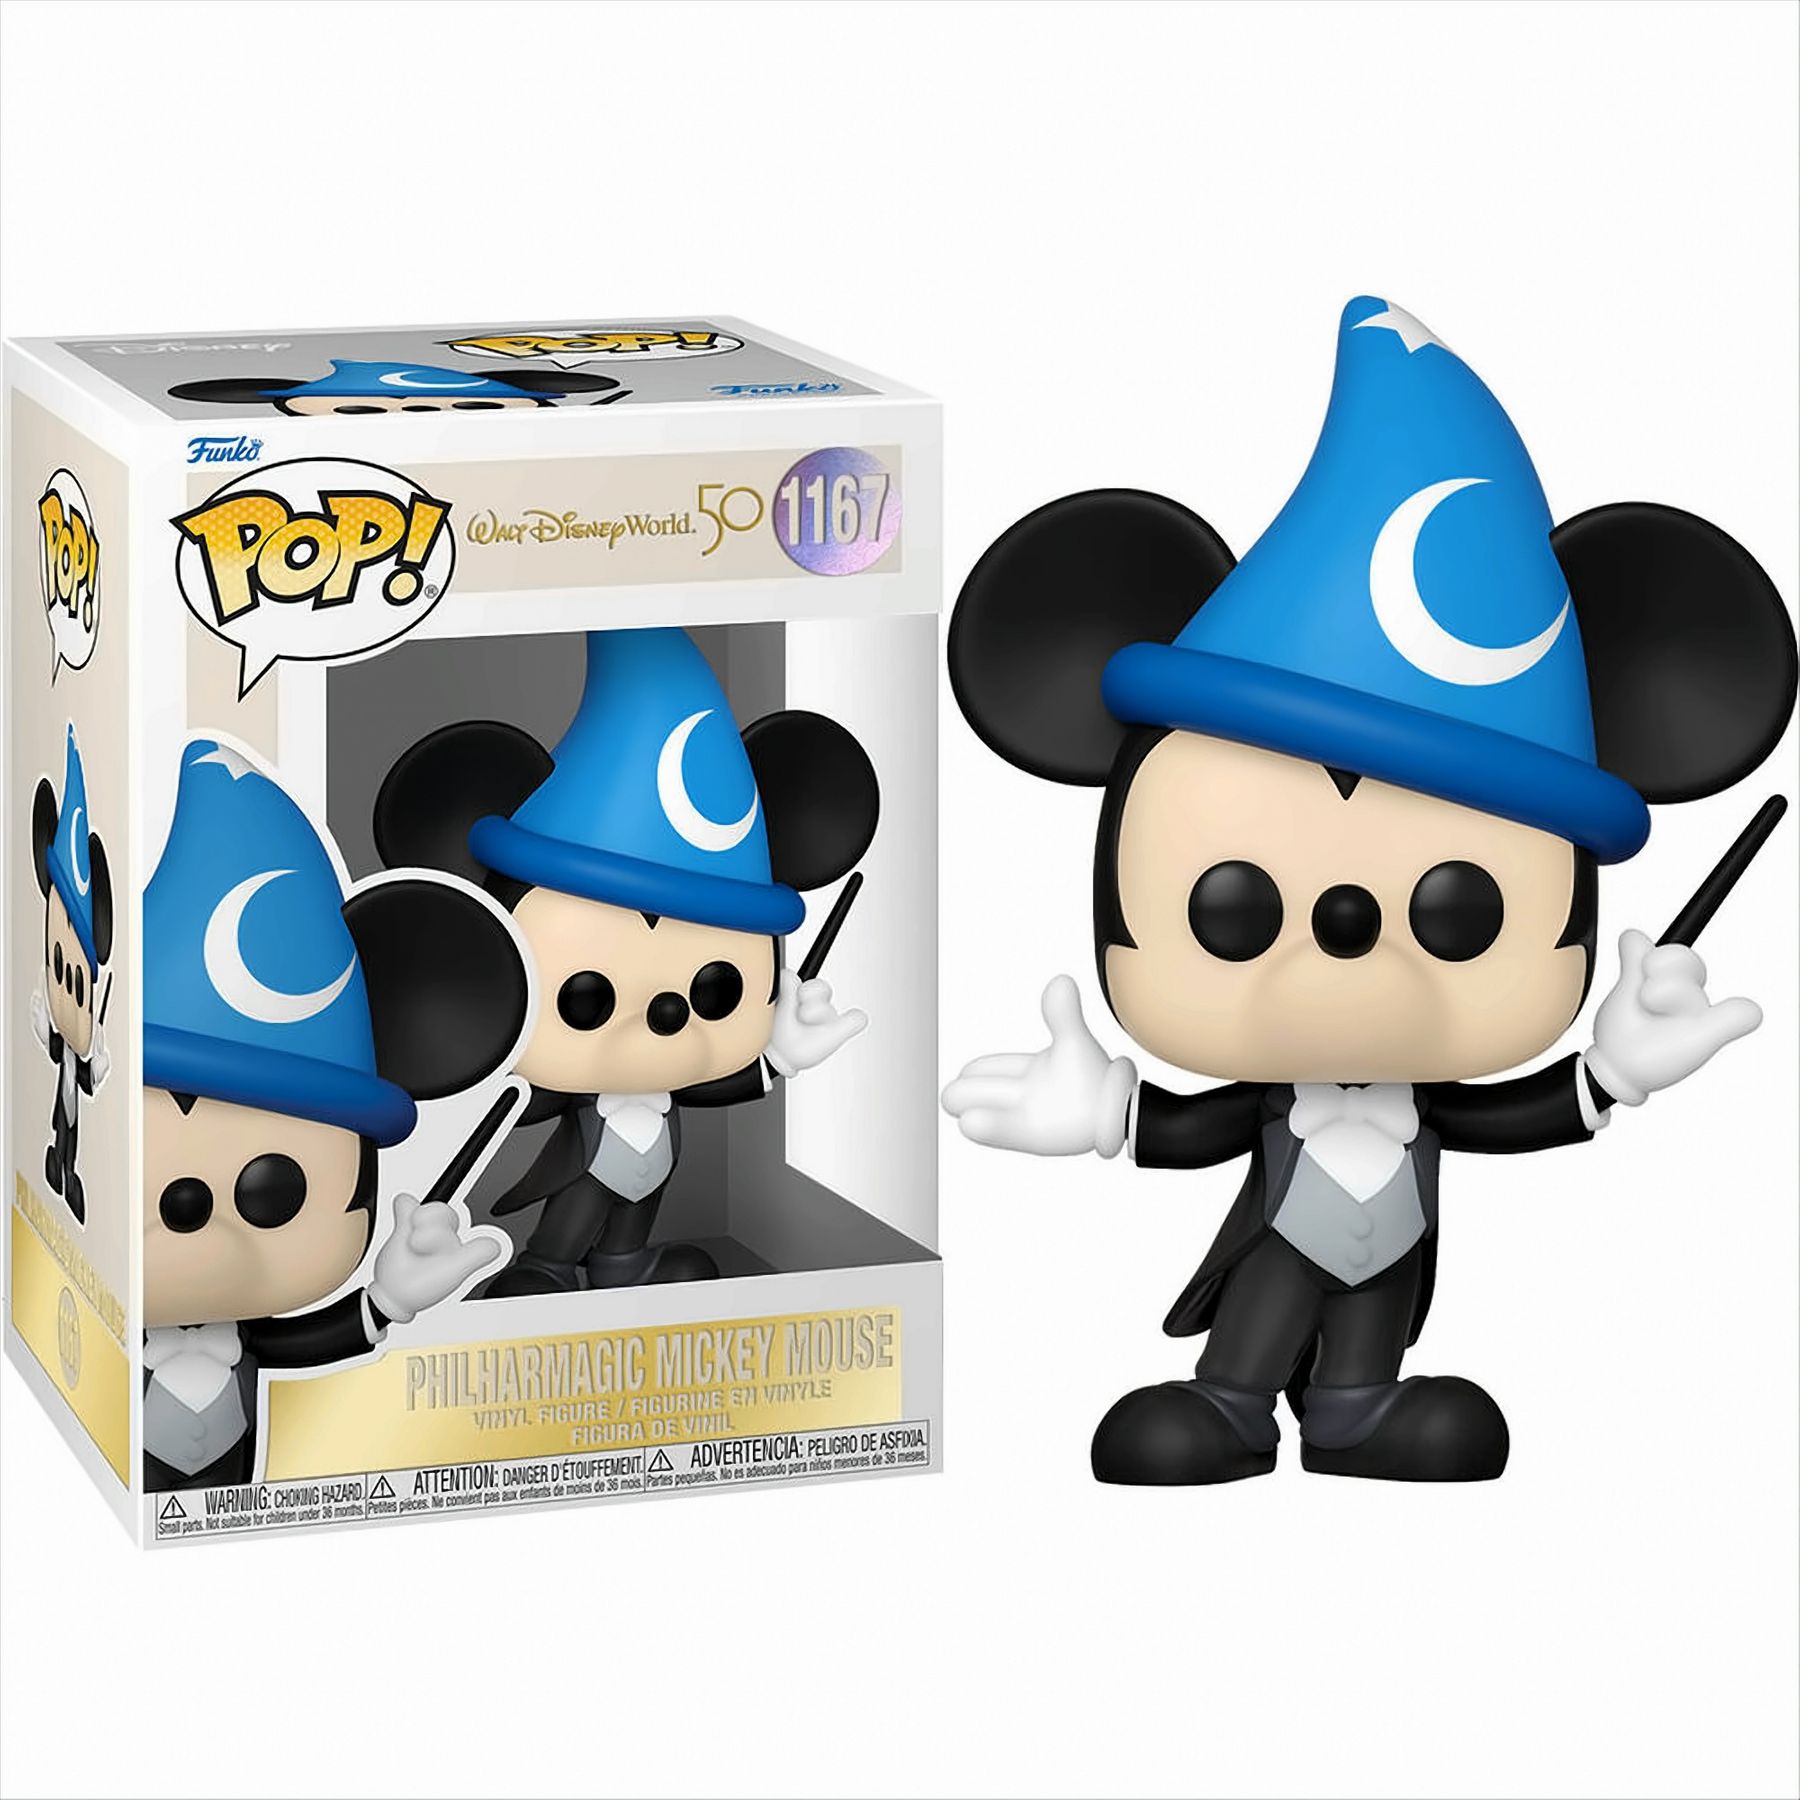 Funko Pop - Disney World 50 - Philharmagic Mickey Mouse von Funko